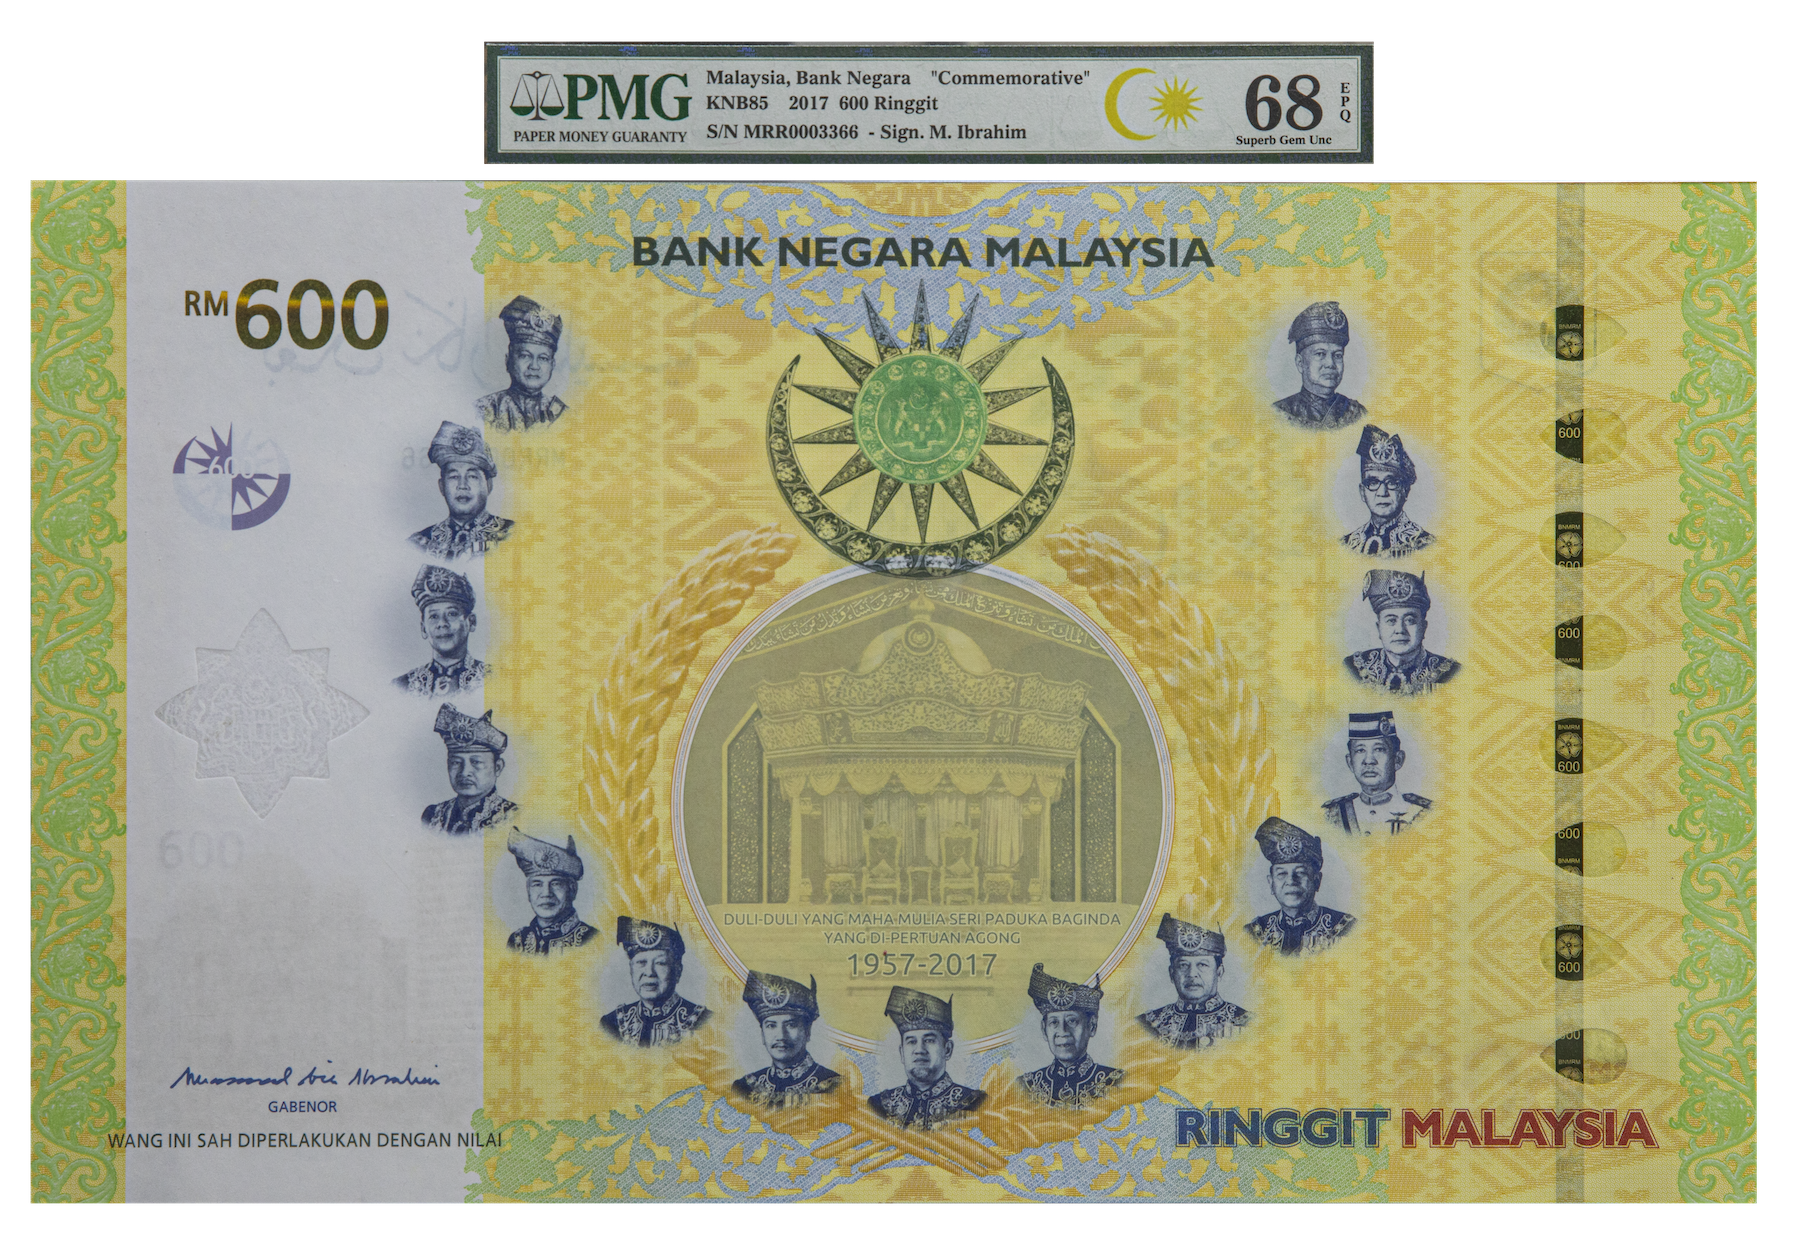 Bank Negara Malaysia 2017 Commemorative Issue 600 Ringgit Mrr00003366 Pmg68epq Monetarium Singapore Private Limited